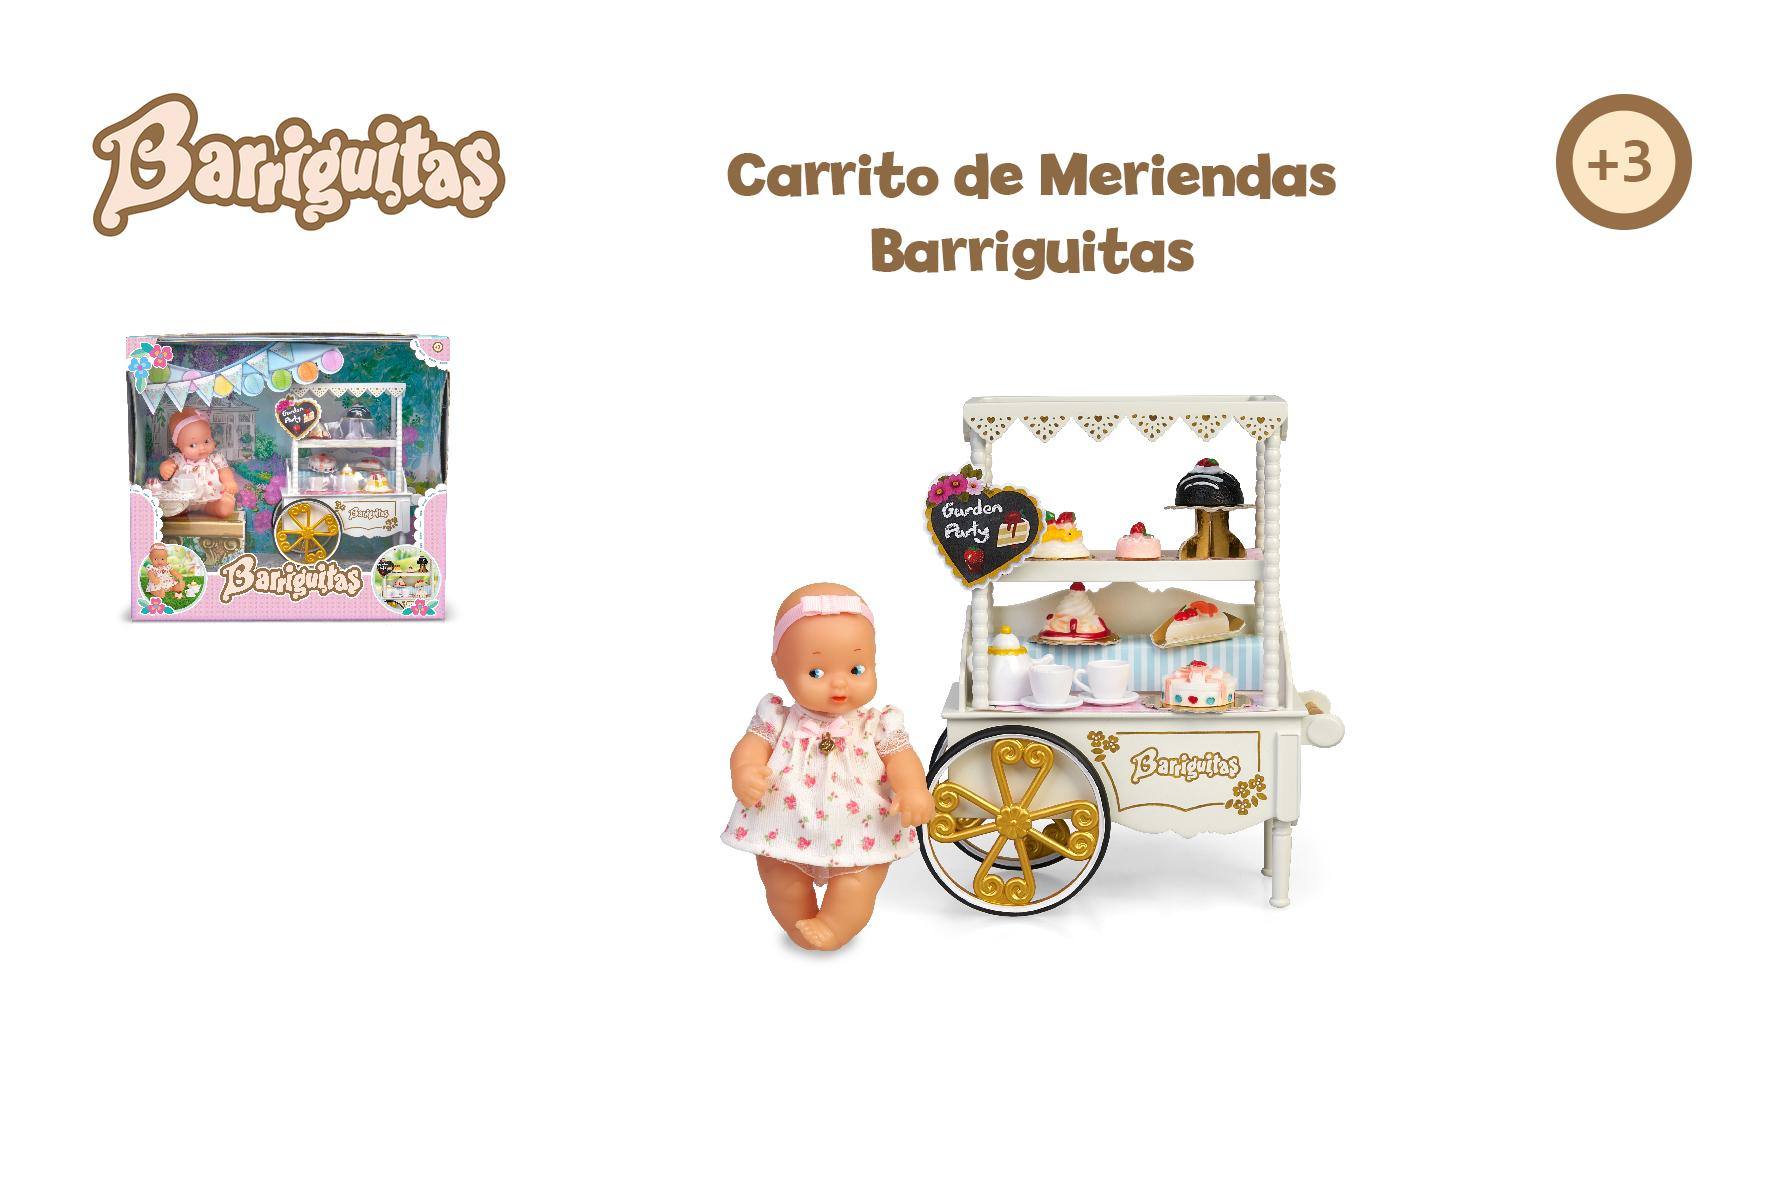 CARRITO DE MERIENDAS BARRIGUITAS 700017019 - V23122